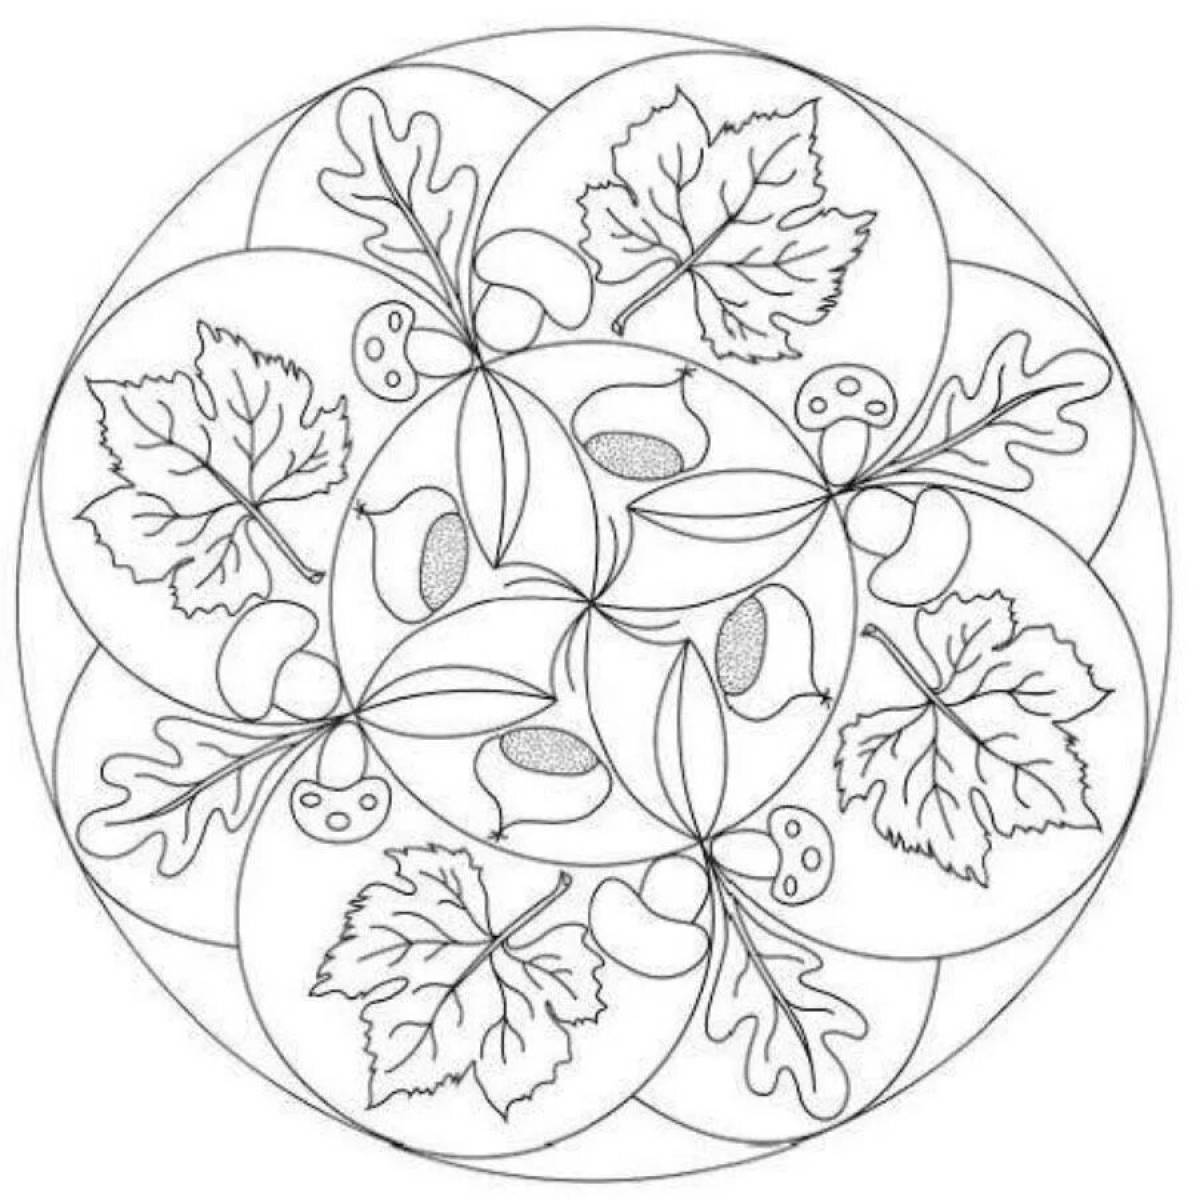 Intriguing coloring Khokhloma pattern in a circle